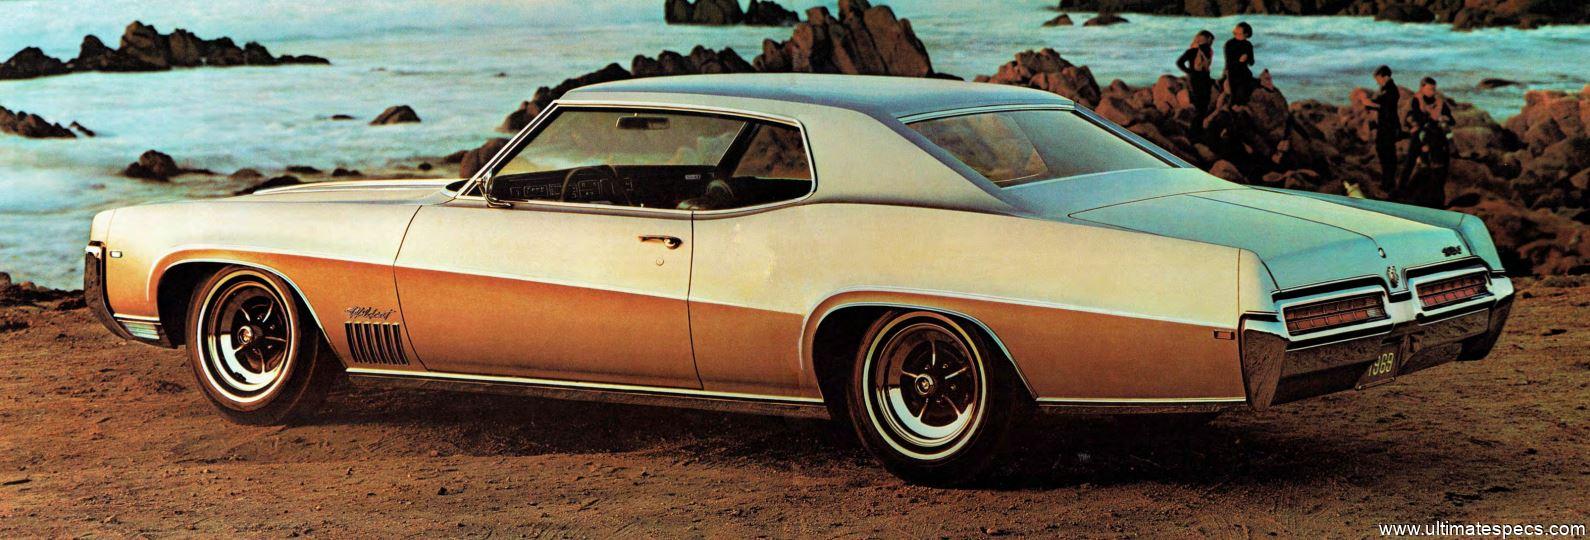 Buick Wildcat Sport Coupe 1969